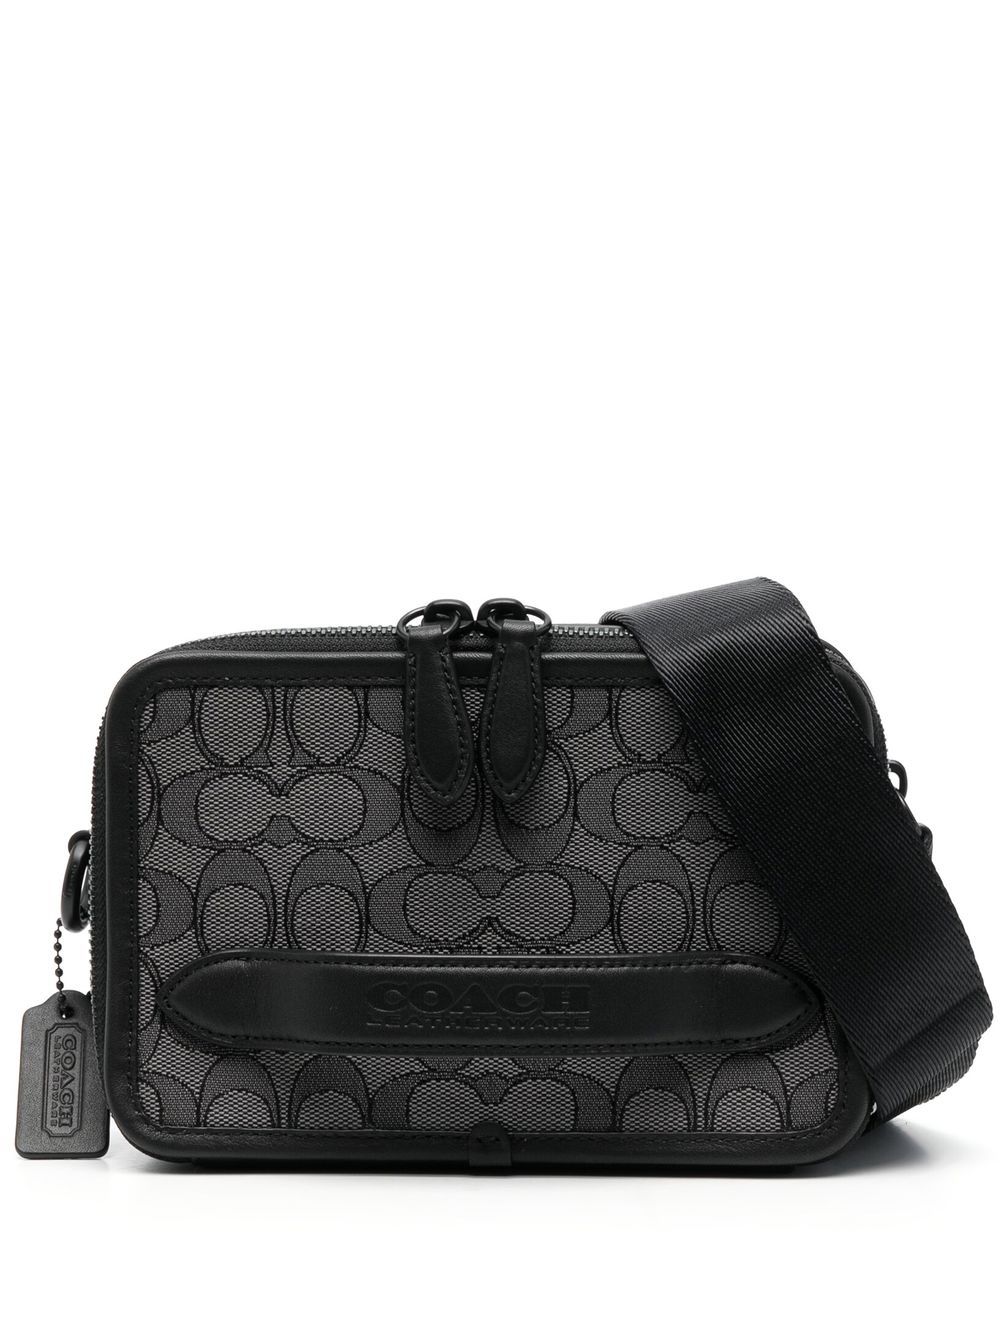 Buy the Coach Signature Monogram Jacquard Leather Mini Shoulder Bag Black